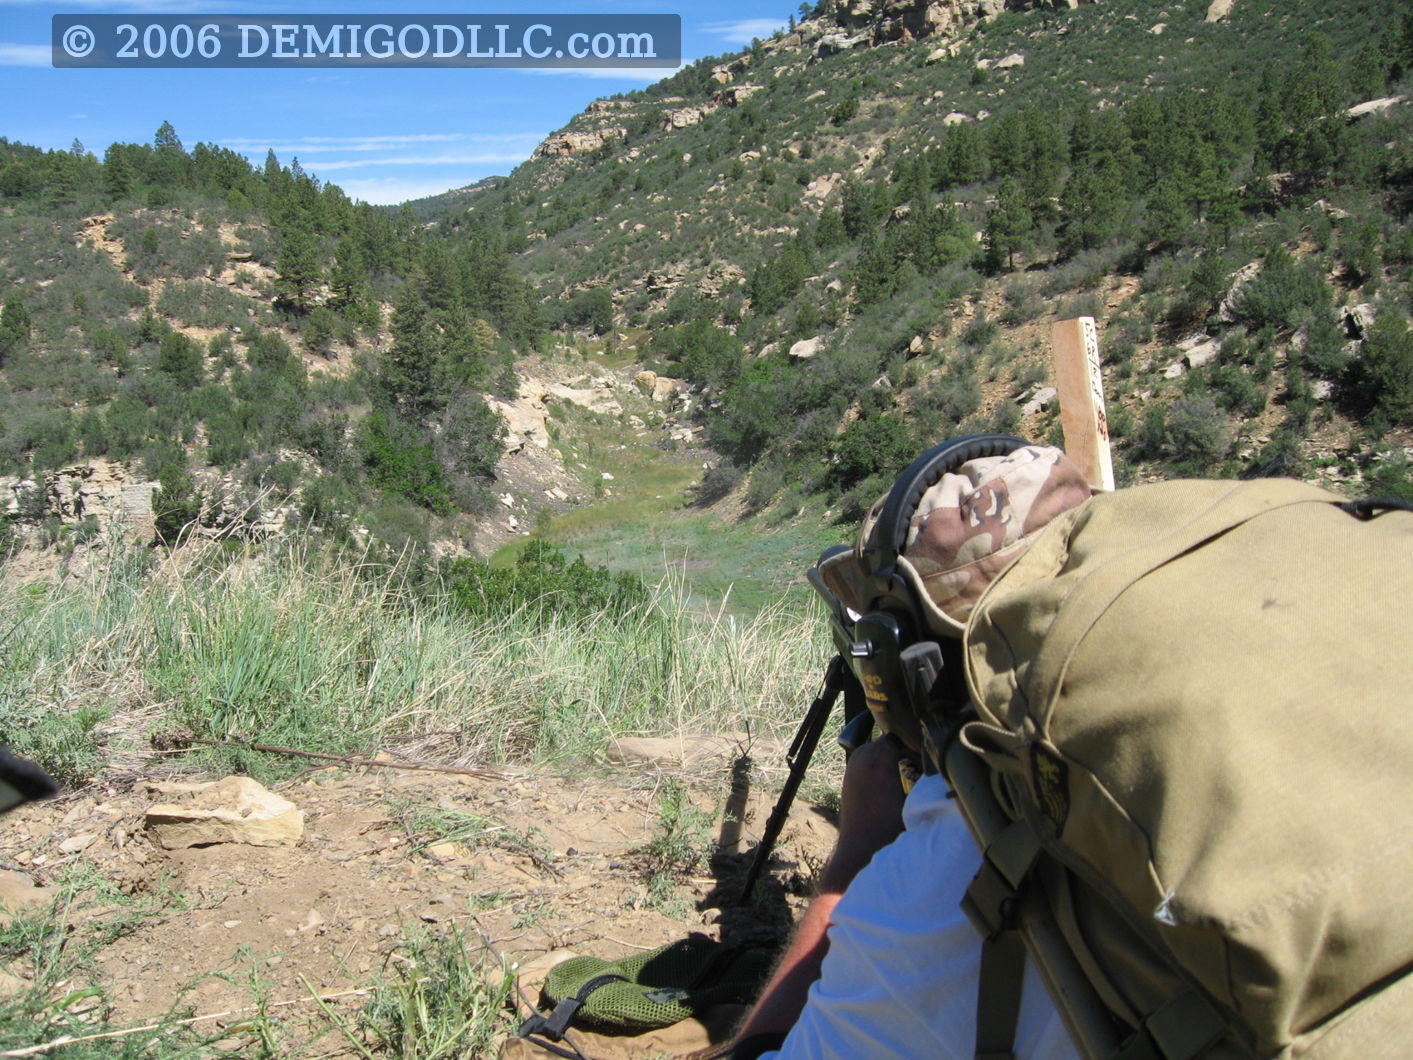 Colorado MultiGun's 2006 Practical Rifle Team Challenge
, photo 